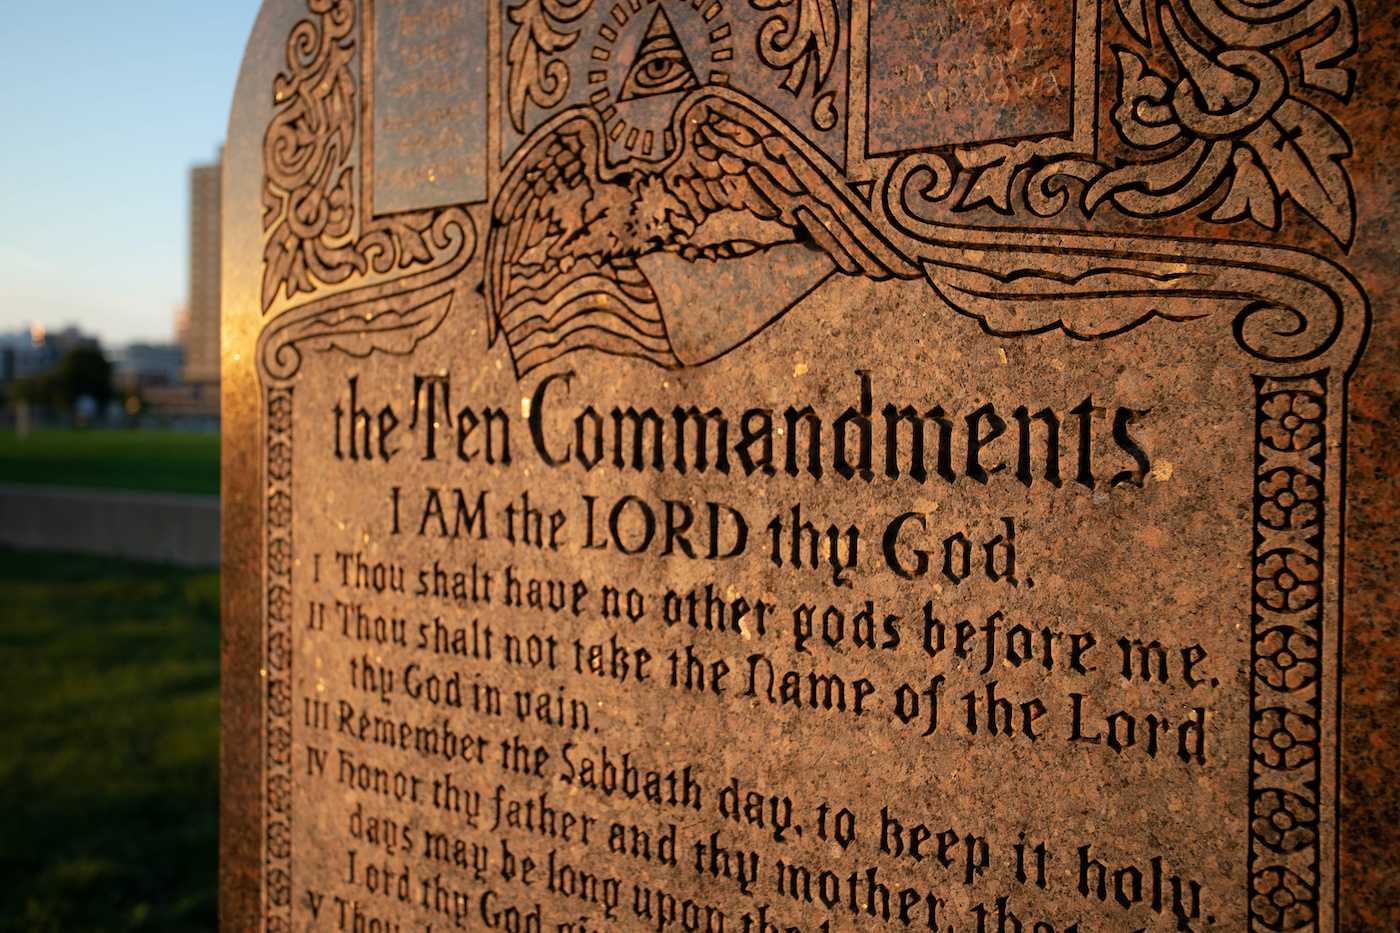 Photo of 10 commandments monument